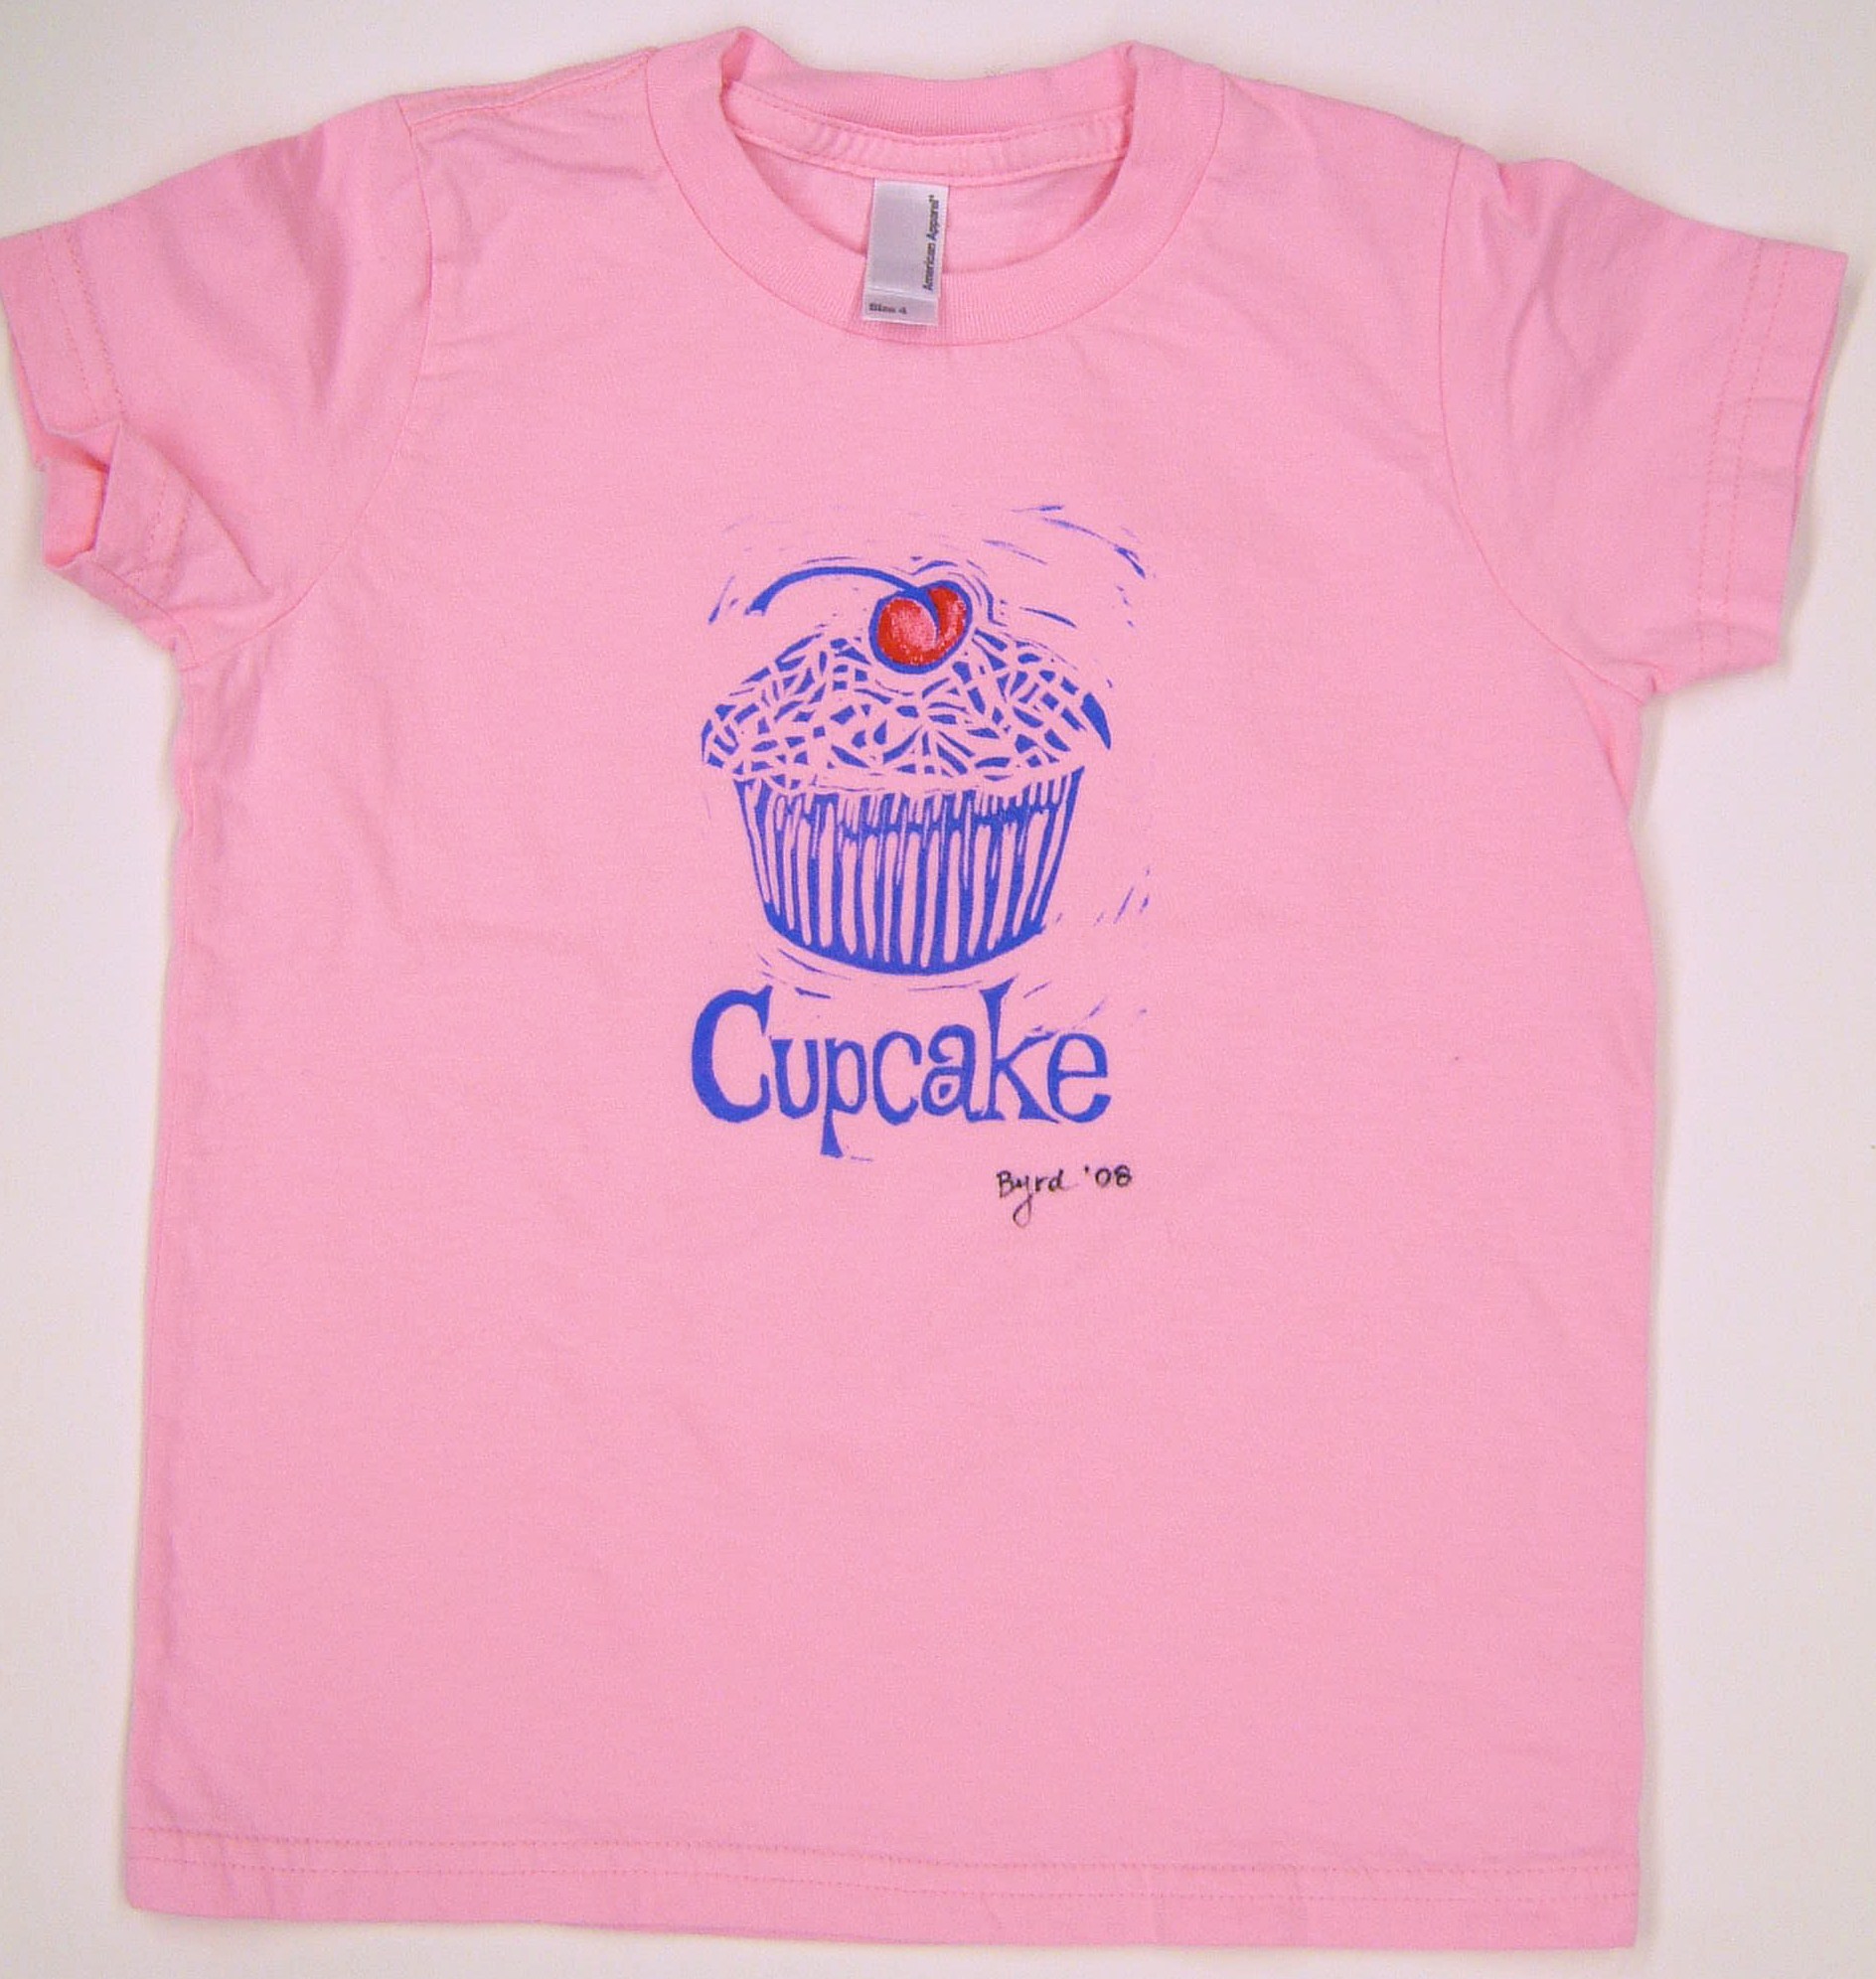 20Byrd-Cupcake-Linocut-handprinted-on-shirt